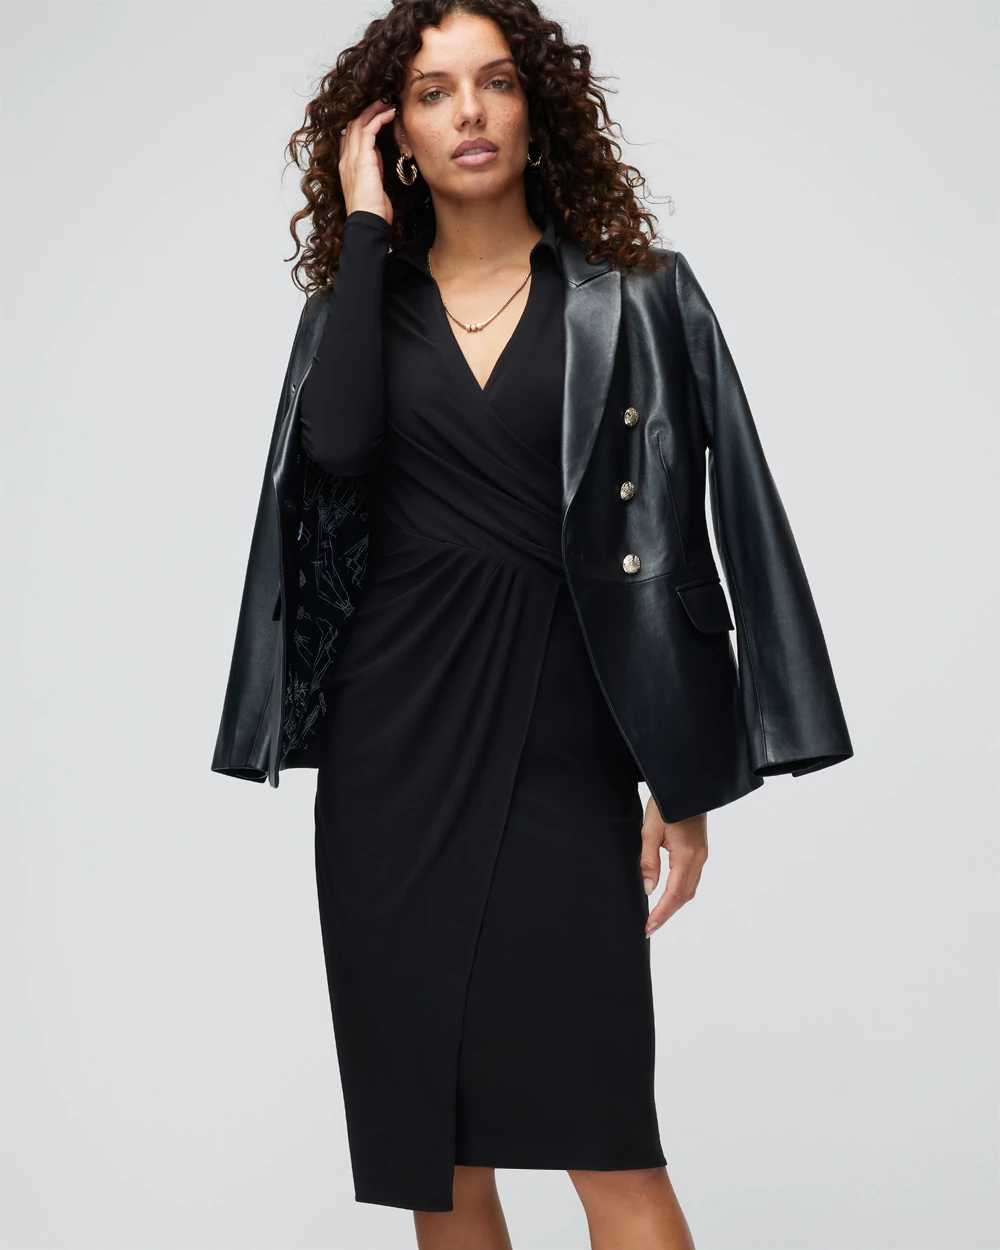 Petite Long Sleeve Matte Jersey Faux Wrap Midi Dress click to view larger image.